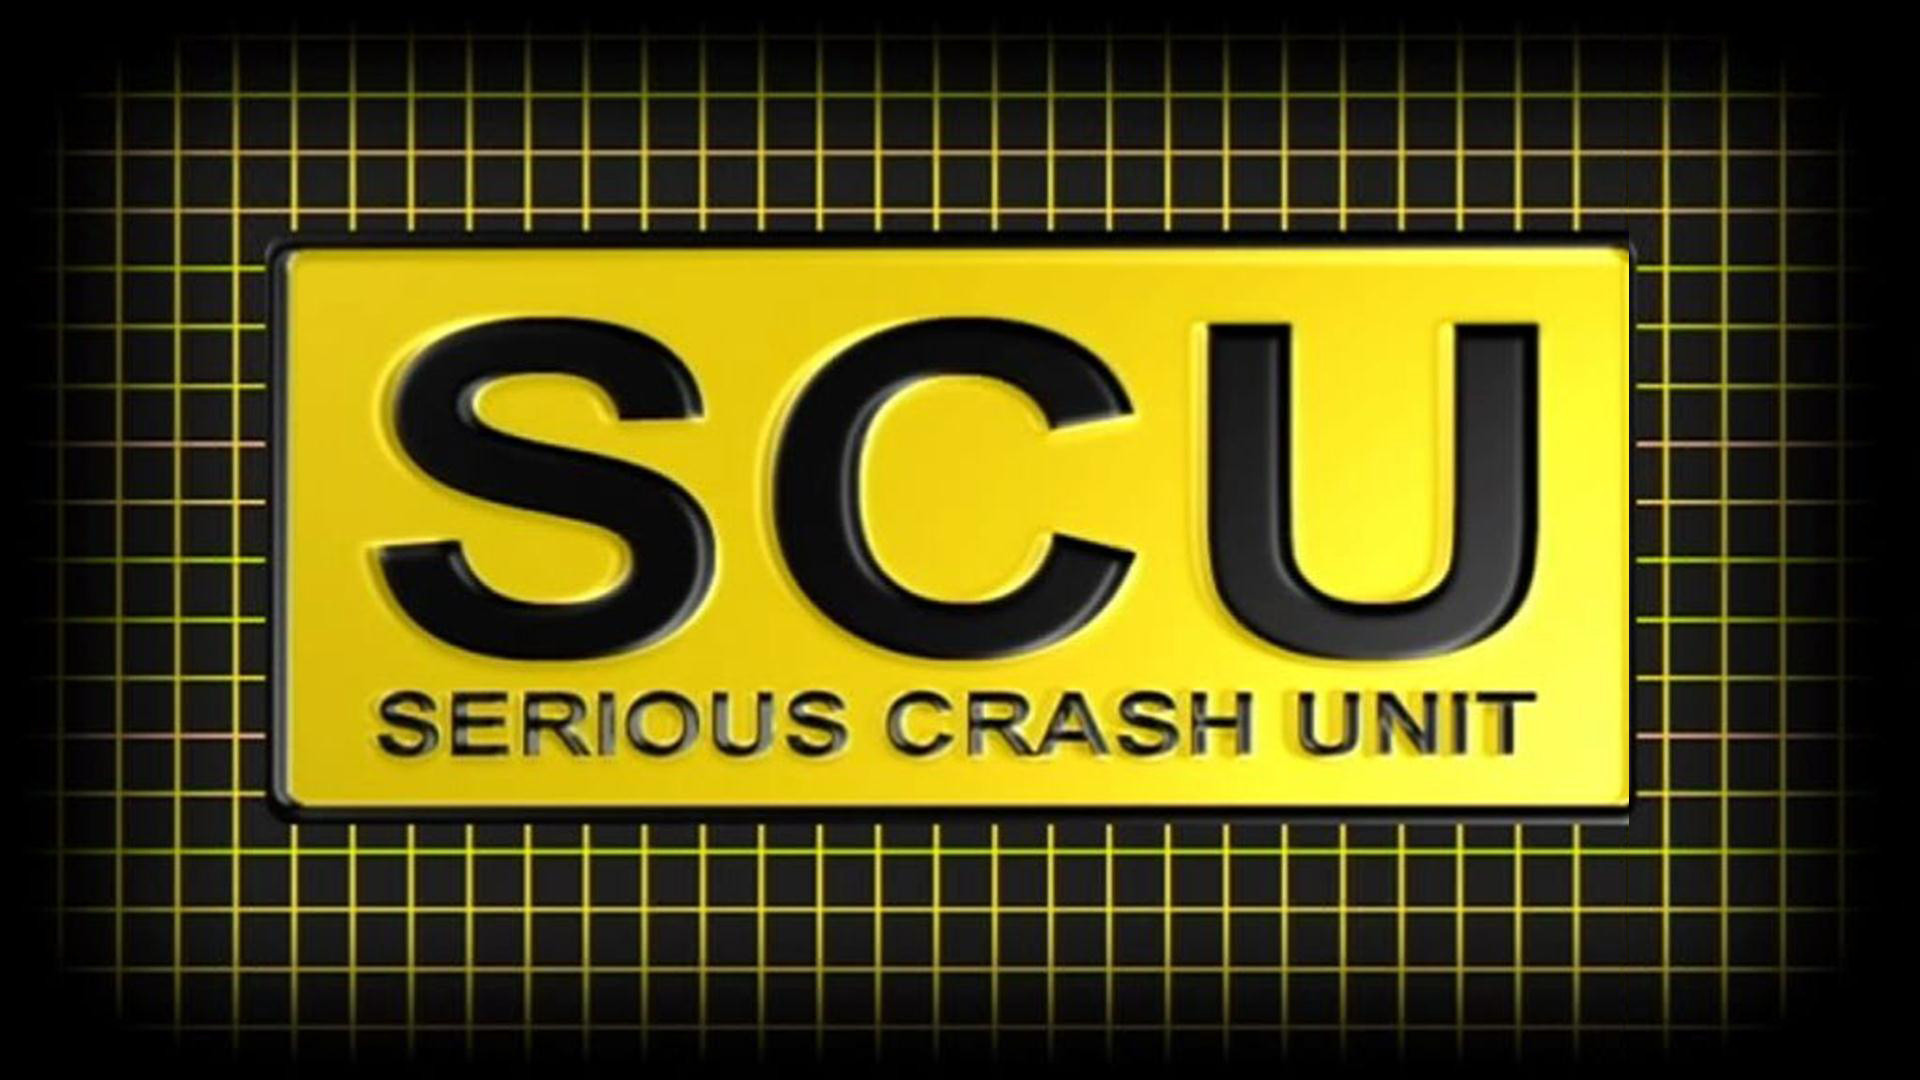 Show SCU: Serious Crash Unit